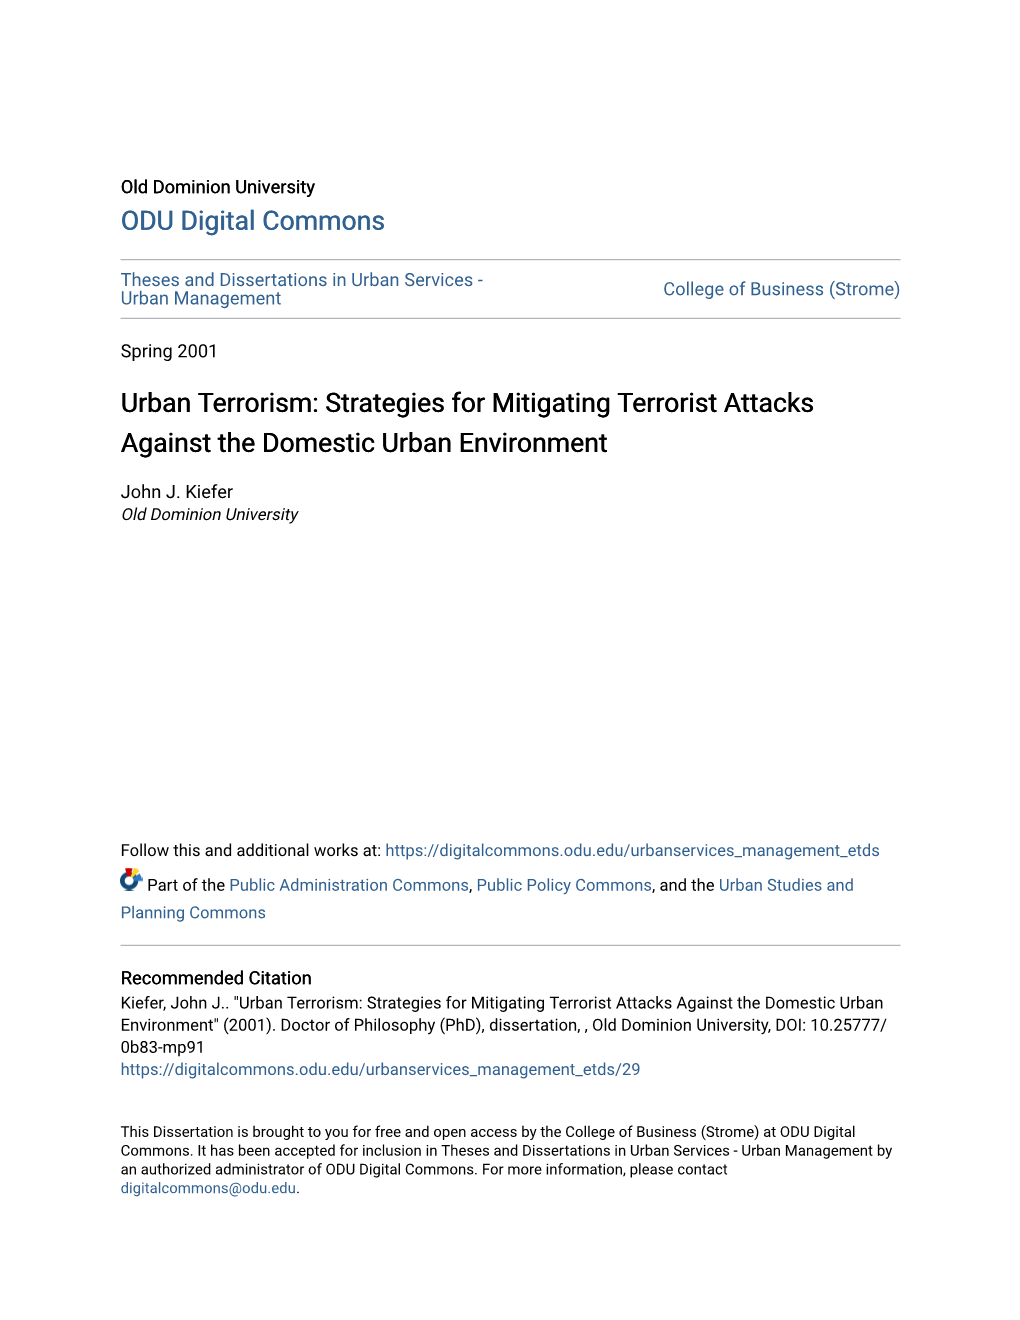 Urban Terrorism: Strategies for Mitigating Terrorist Attacks Against the Domestic Urban Environment